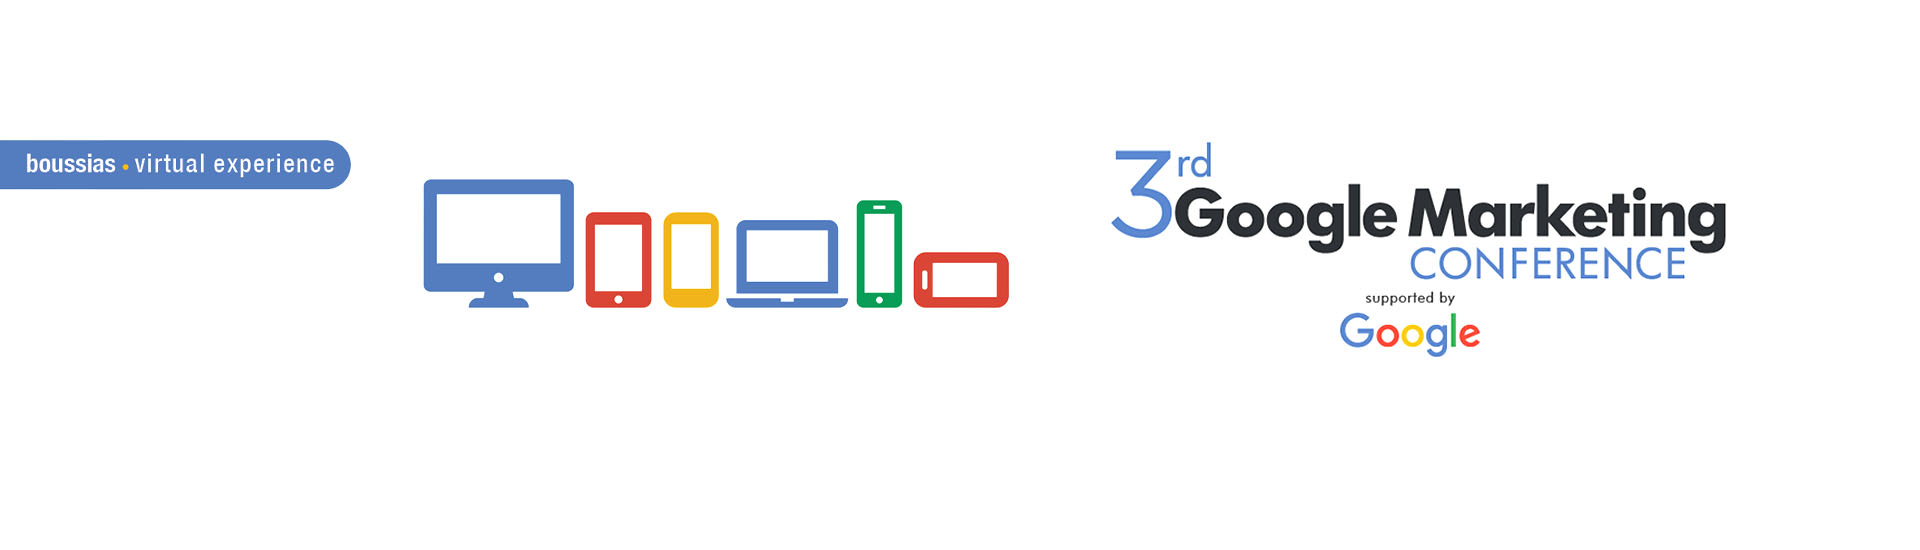 Proud Sponsor - 3rd Google Marketing Conference 2020